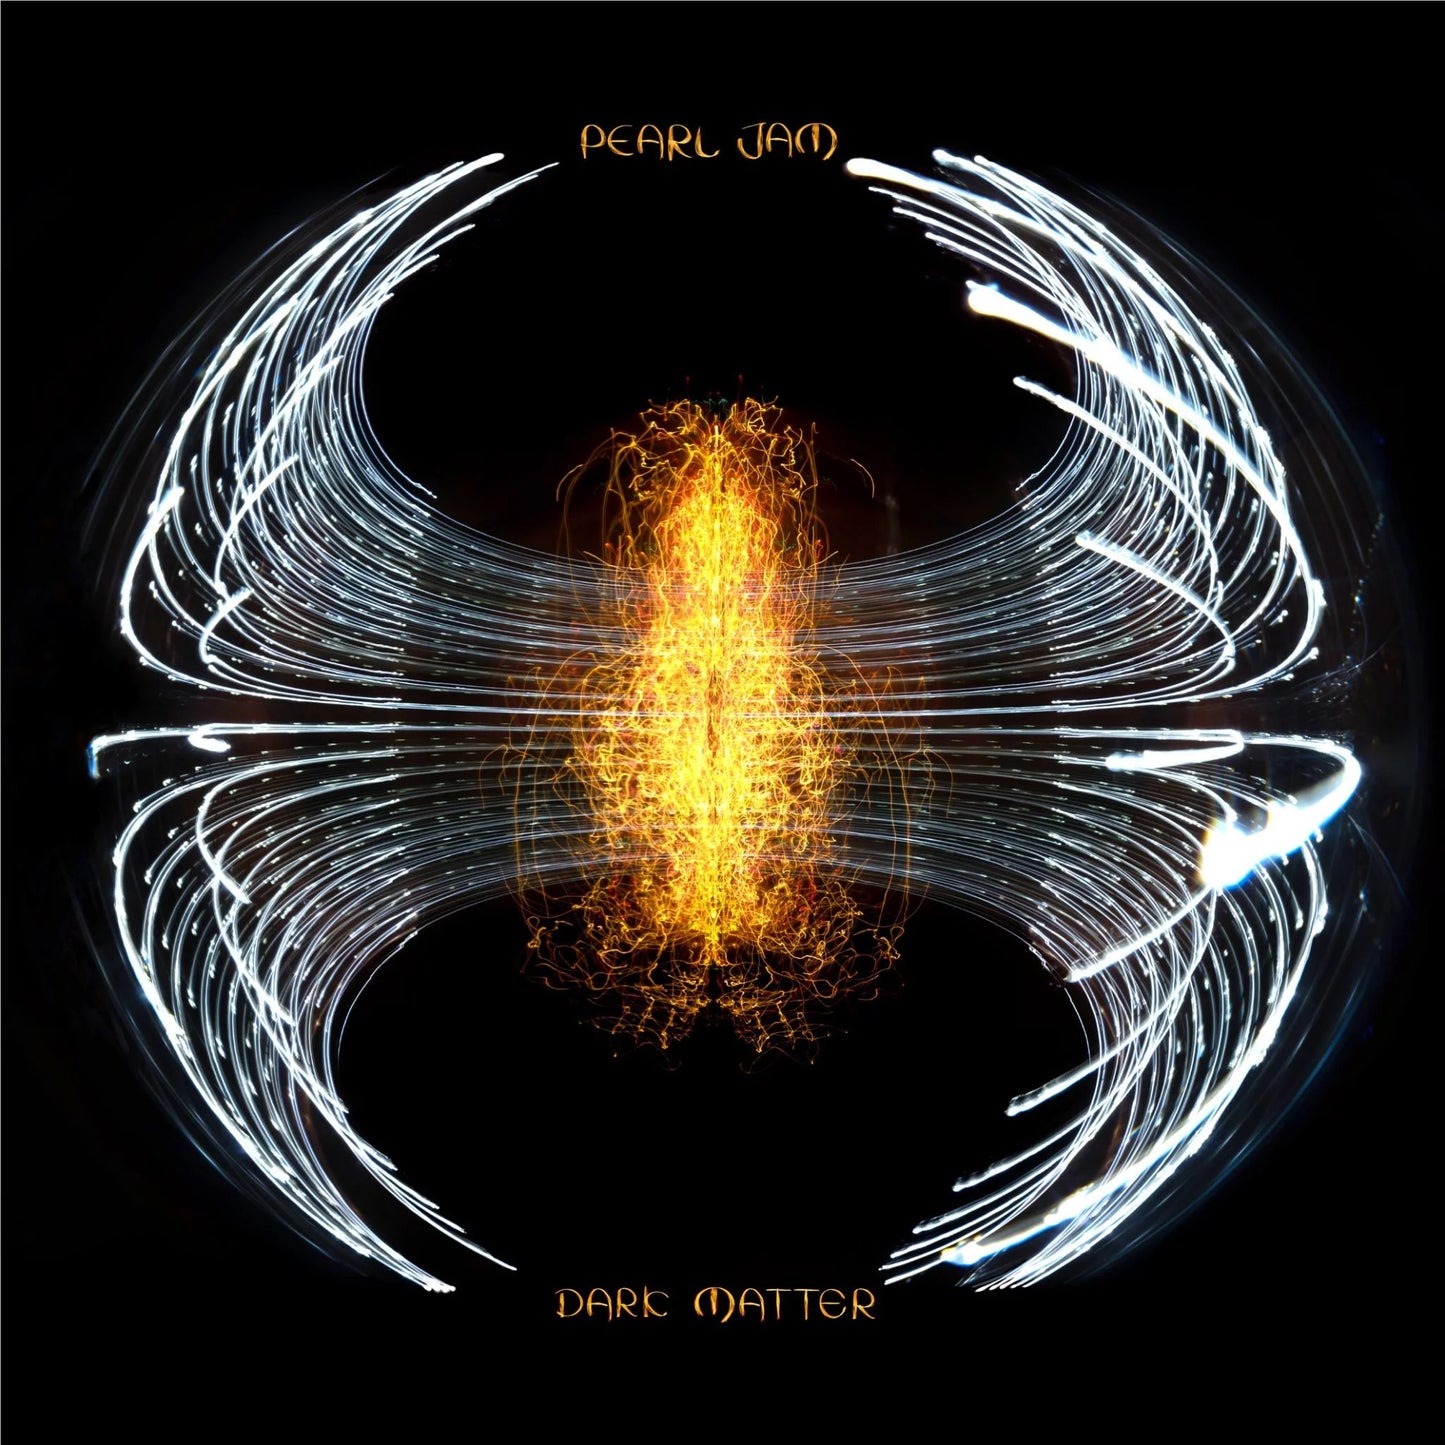 Pearl Jam - Dark Matter | Buy the Vinyl LP from Flying Nun Records